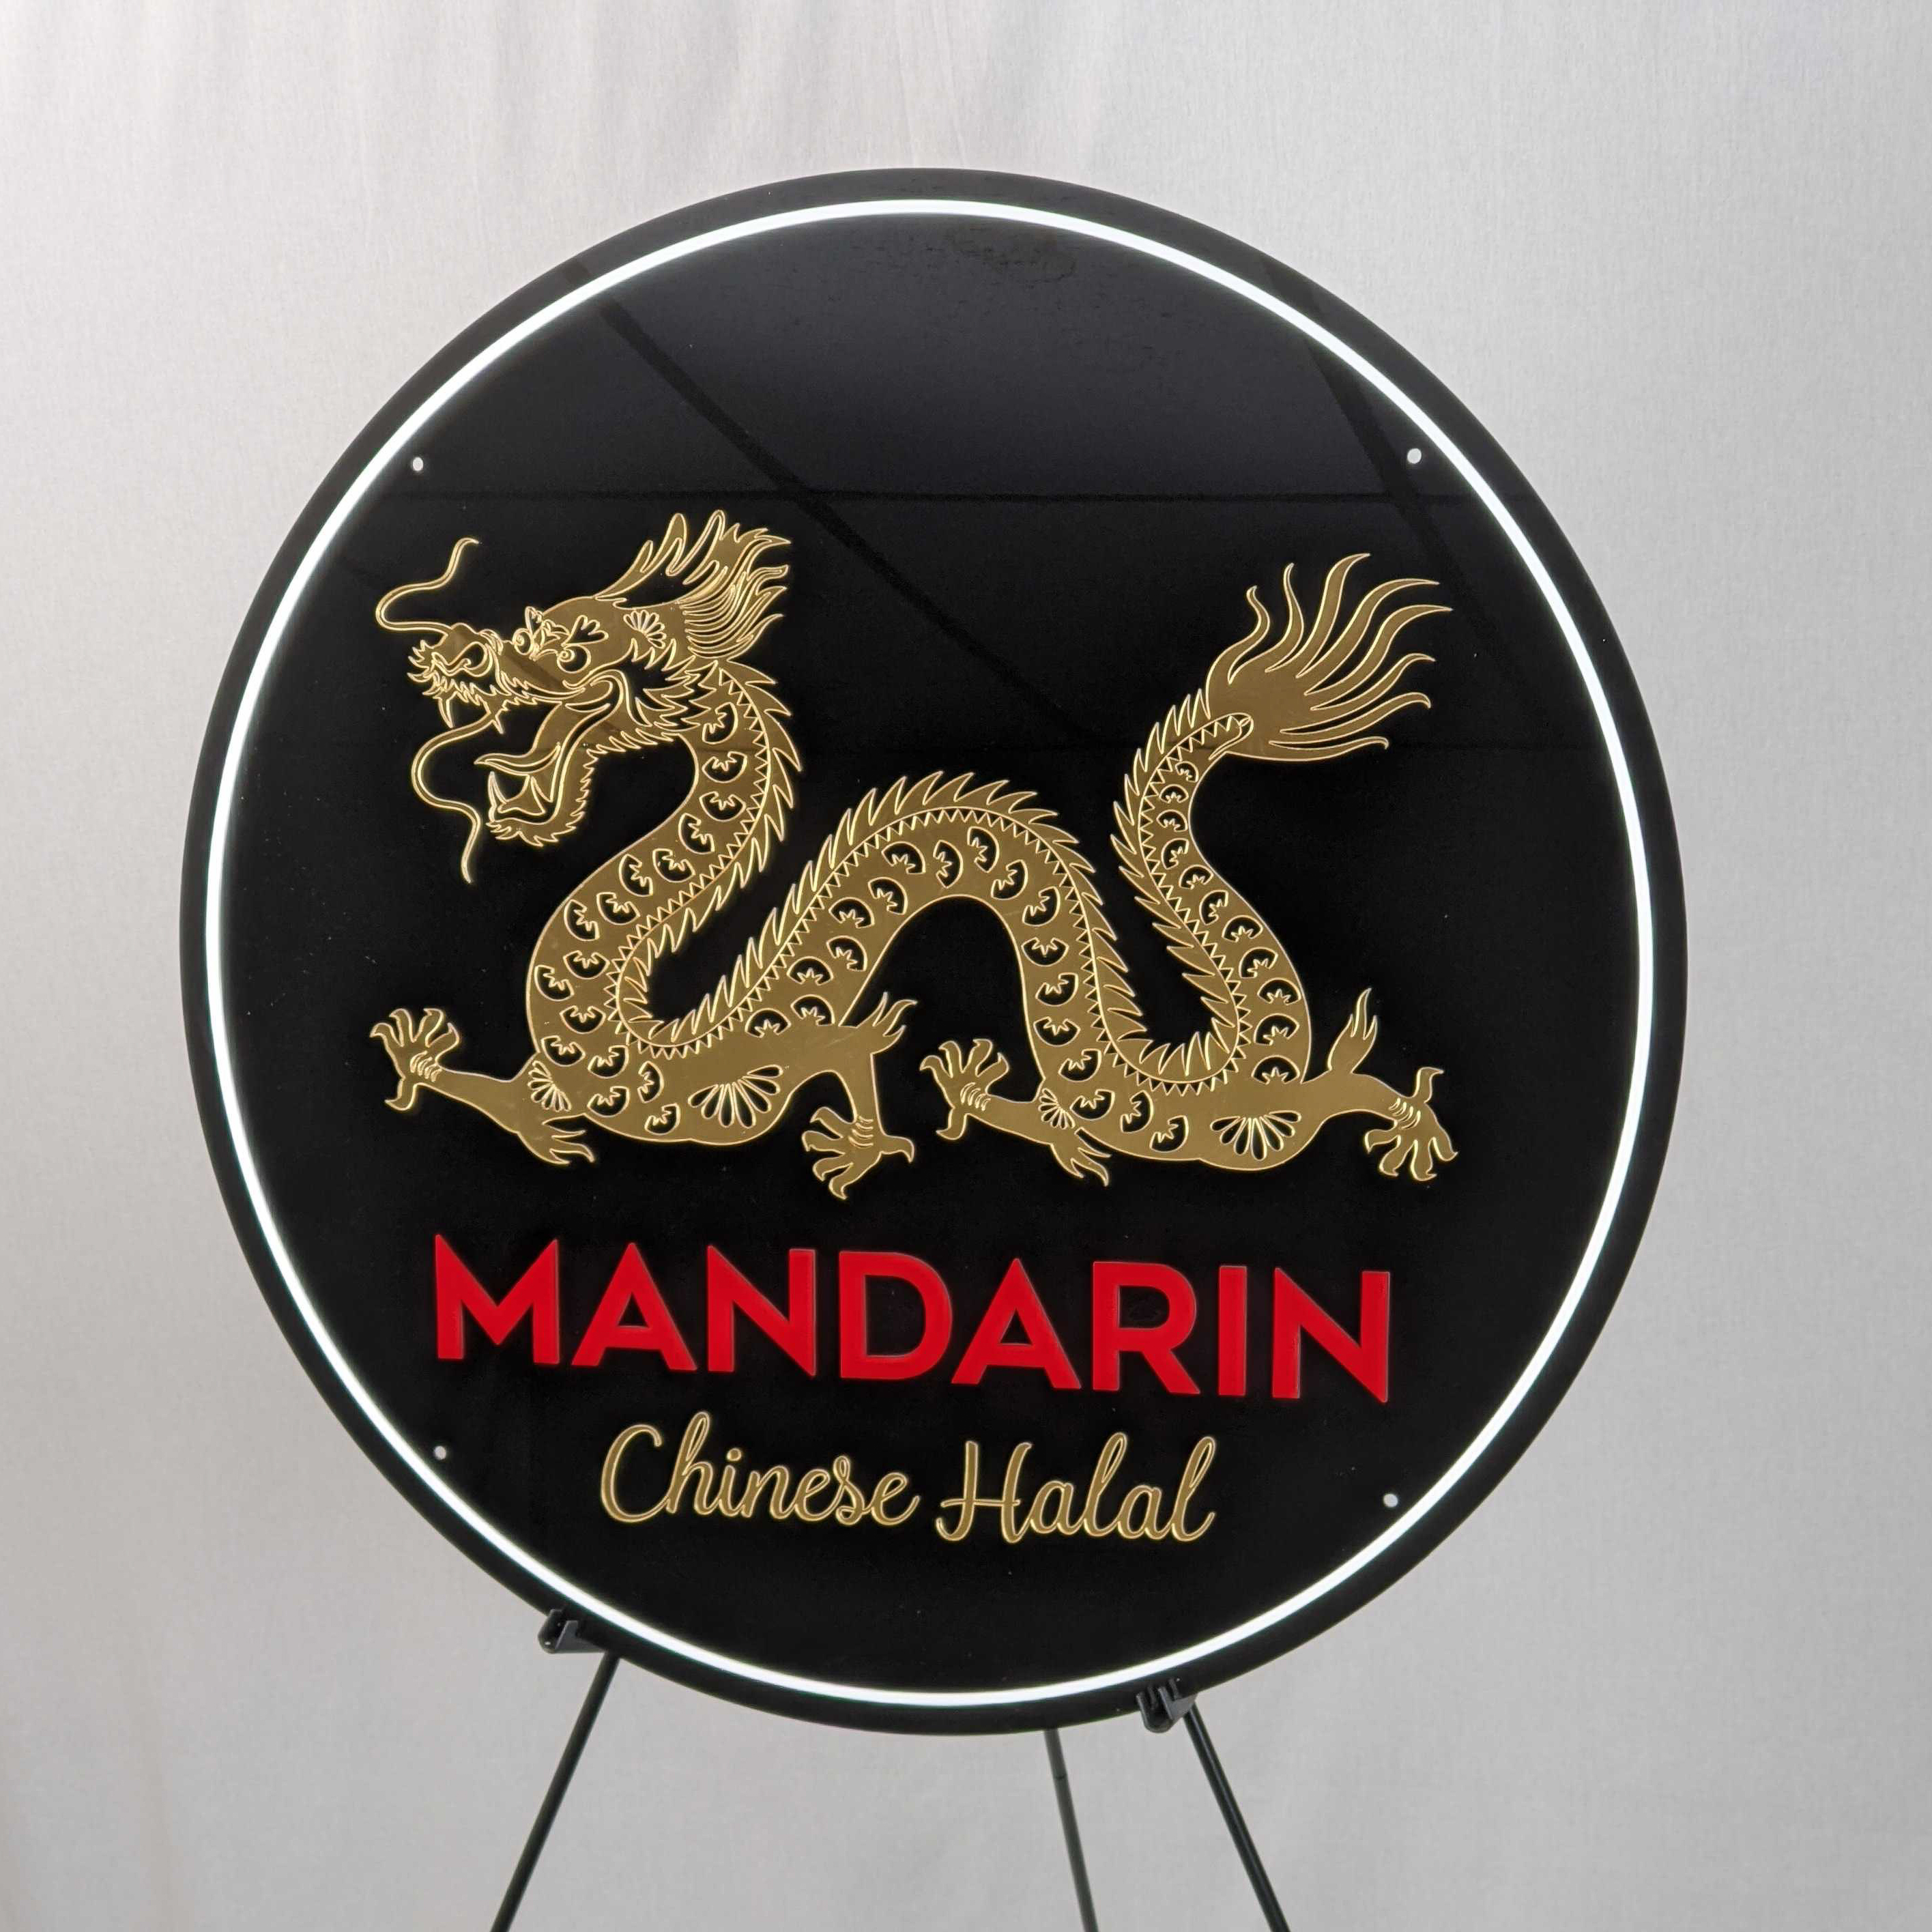 Mandarin Chinese Halal Round Sign